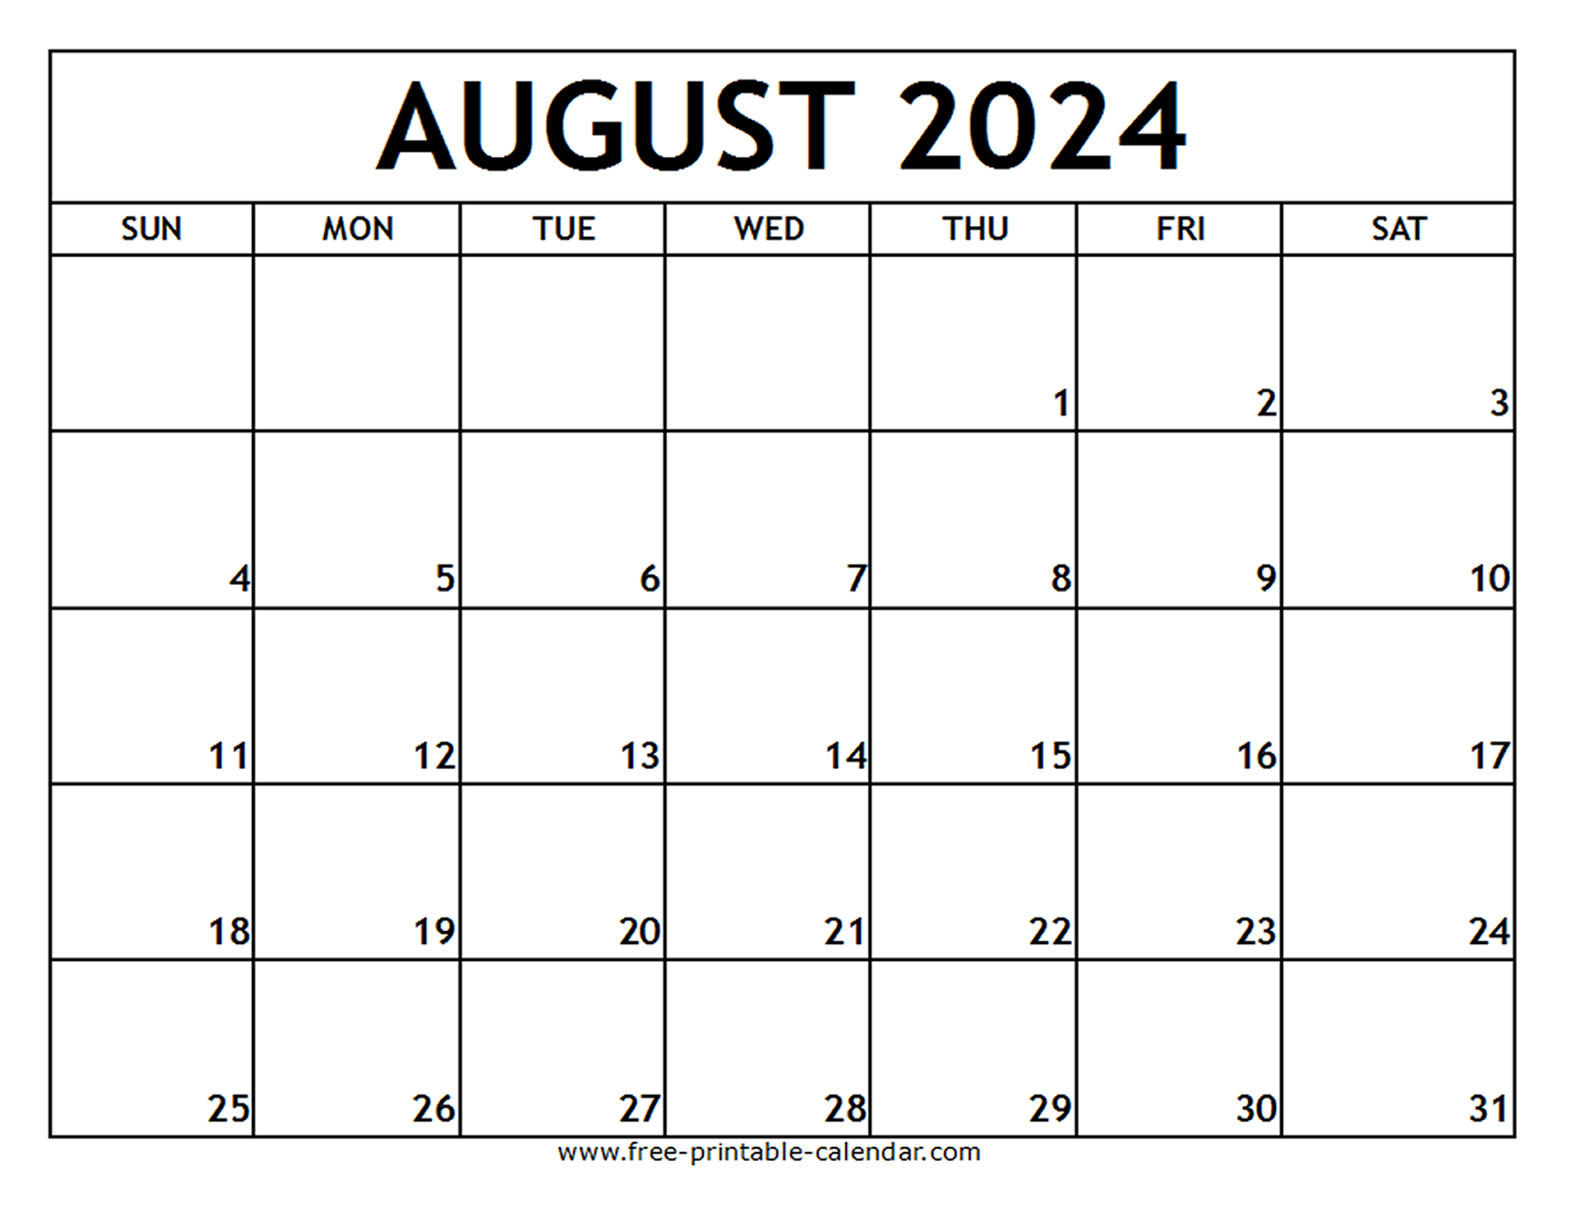 August 2024 Printable Calendar - Free-Printable-Calendar throughout Free Printable Calendar August 2024 Word